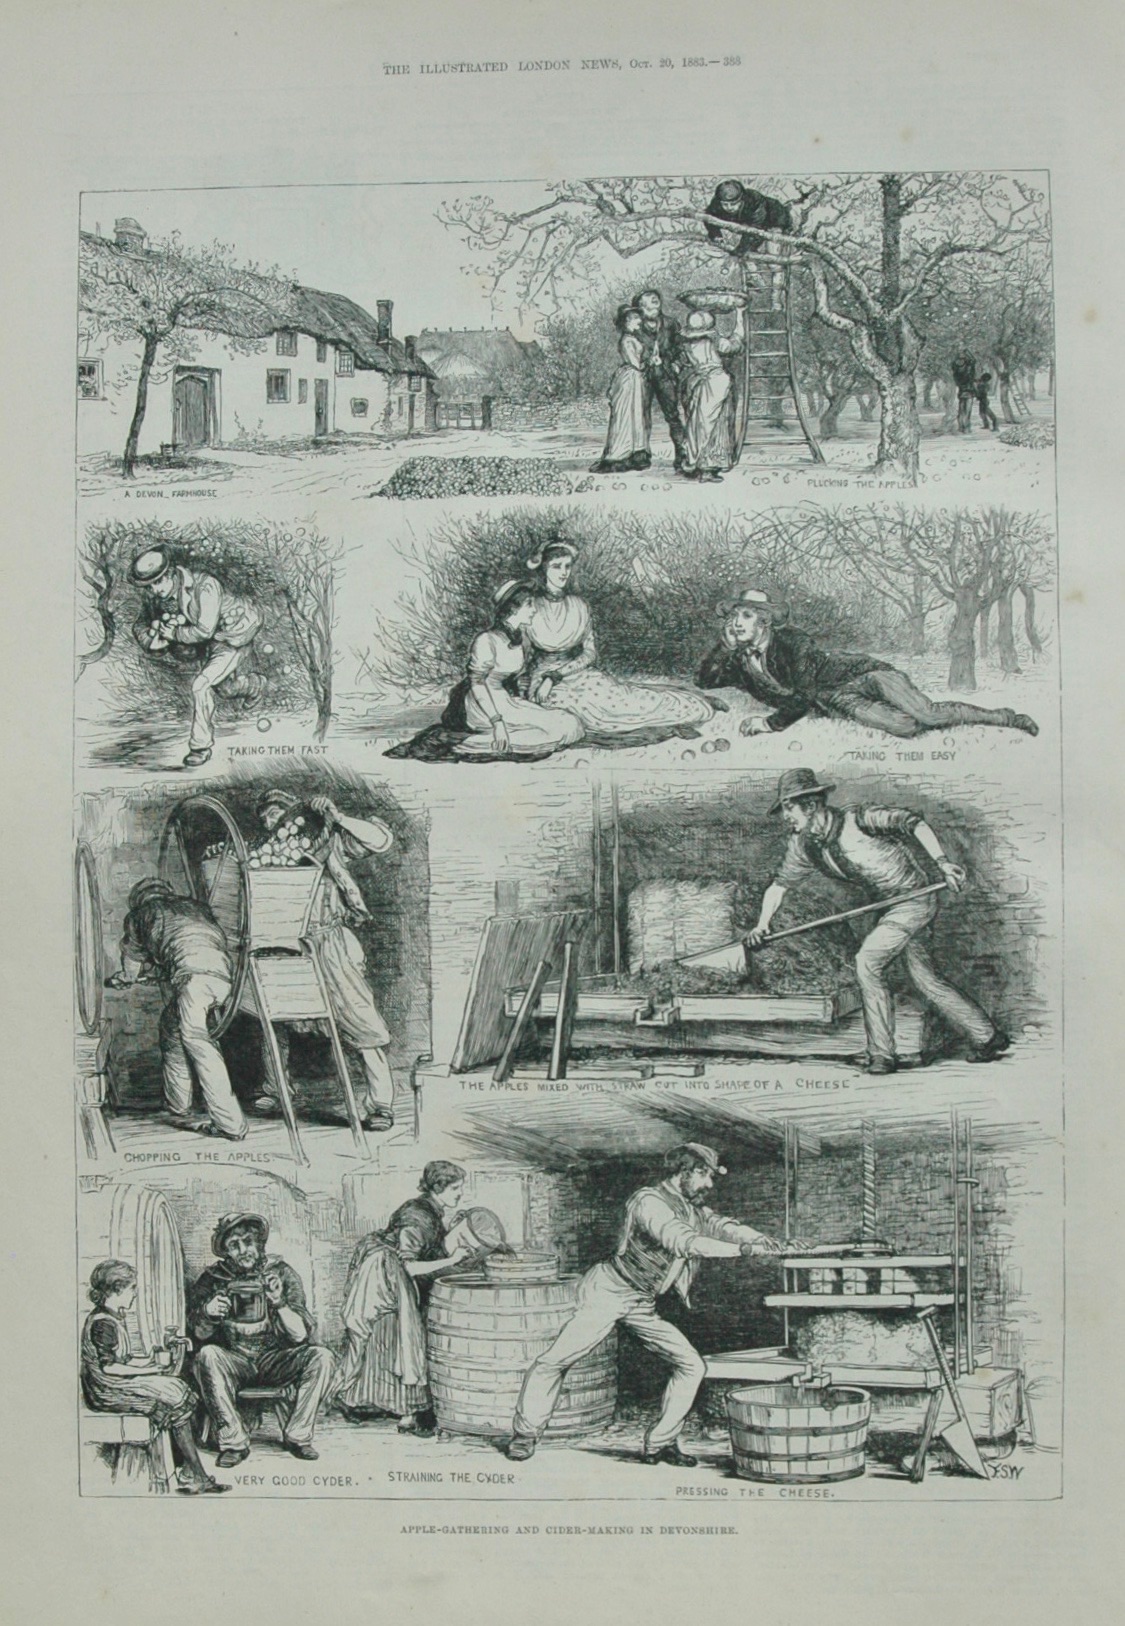 Apple-Gathering in Devonshire - 1883